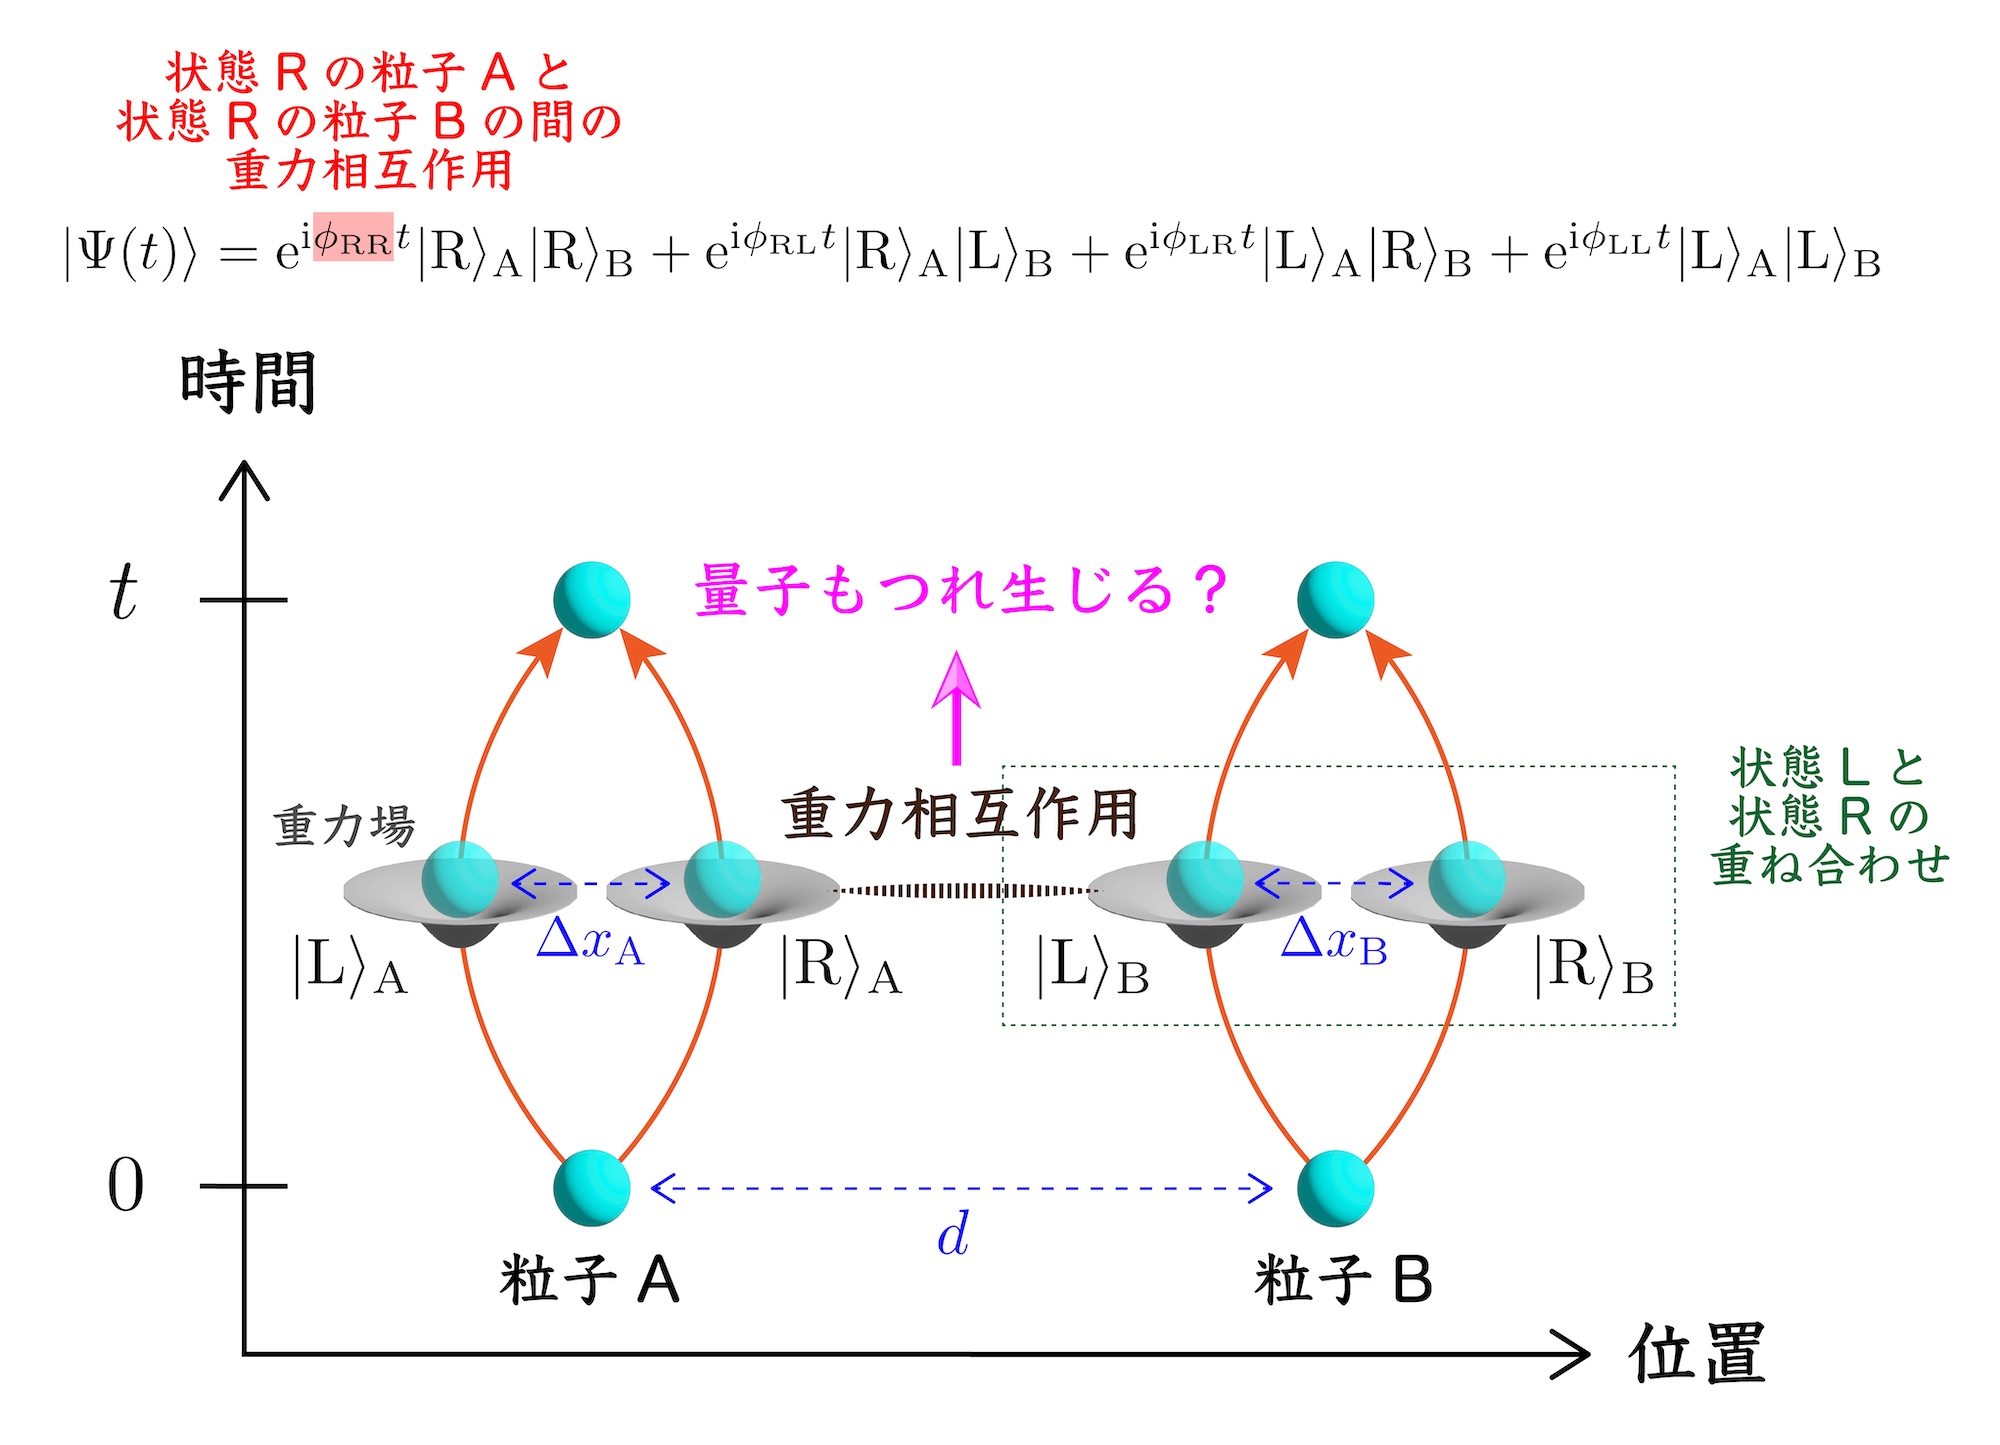 <dfn class="fig">図5</dfn>：<span class="qrinews-figure-title">BMV 実験</span>　粒子が左側に位置する (図中の状態 L) か、右側に位置する (図中の状態 R) かは観測するまで確定しない。重ね合わせ状態での重力相互作用により、2 つの粒子の間には量子もつれが生じる。